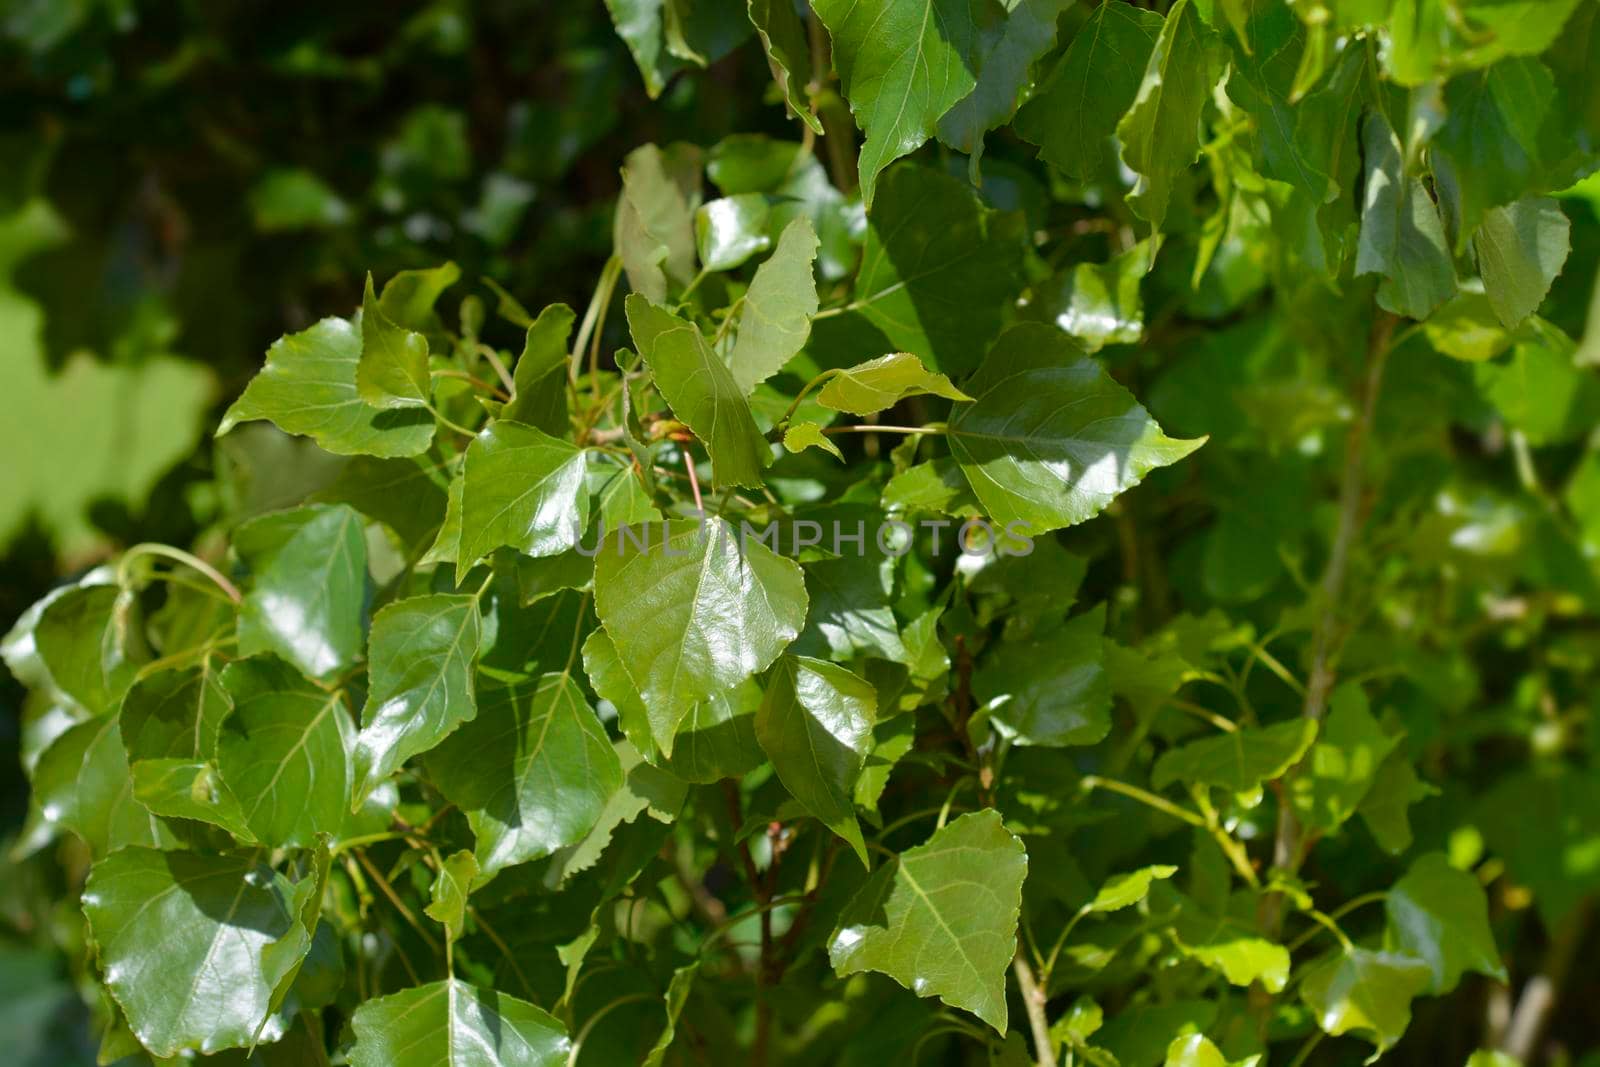 Lombardy poplar - Latin name - Populus nigra var. italica